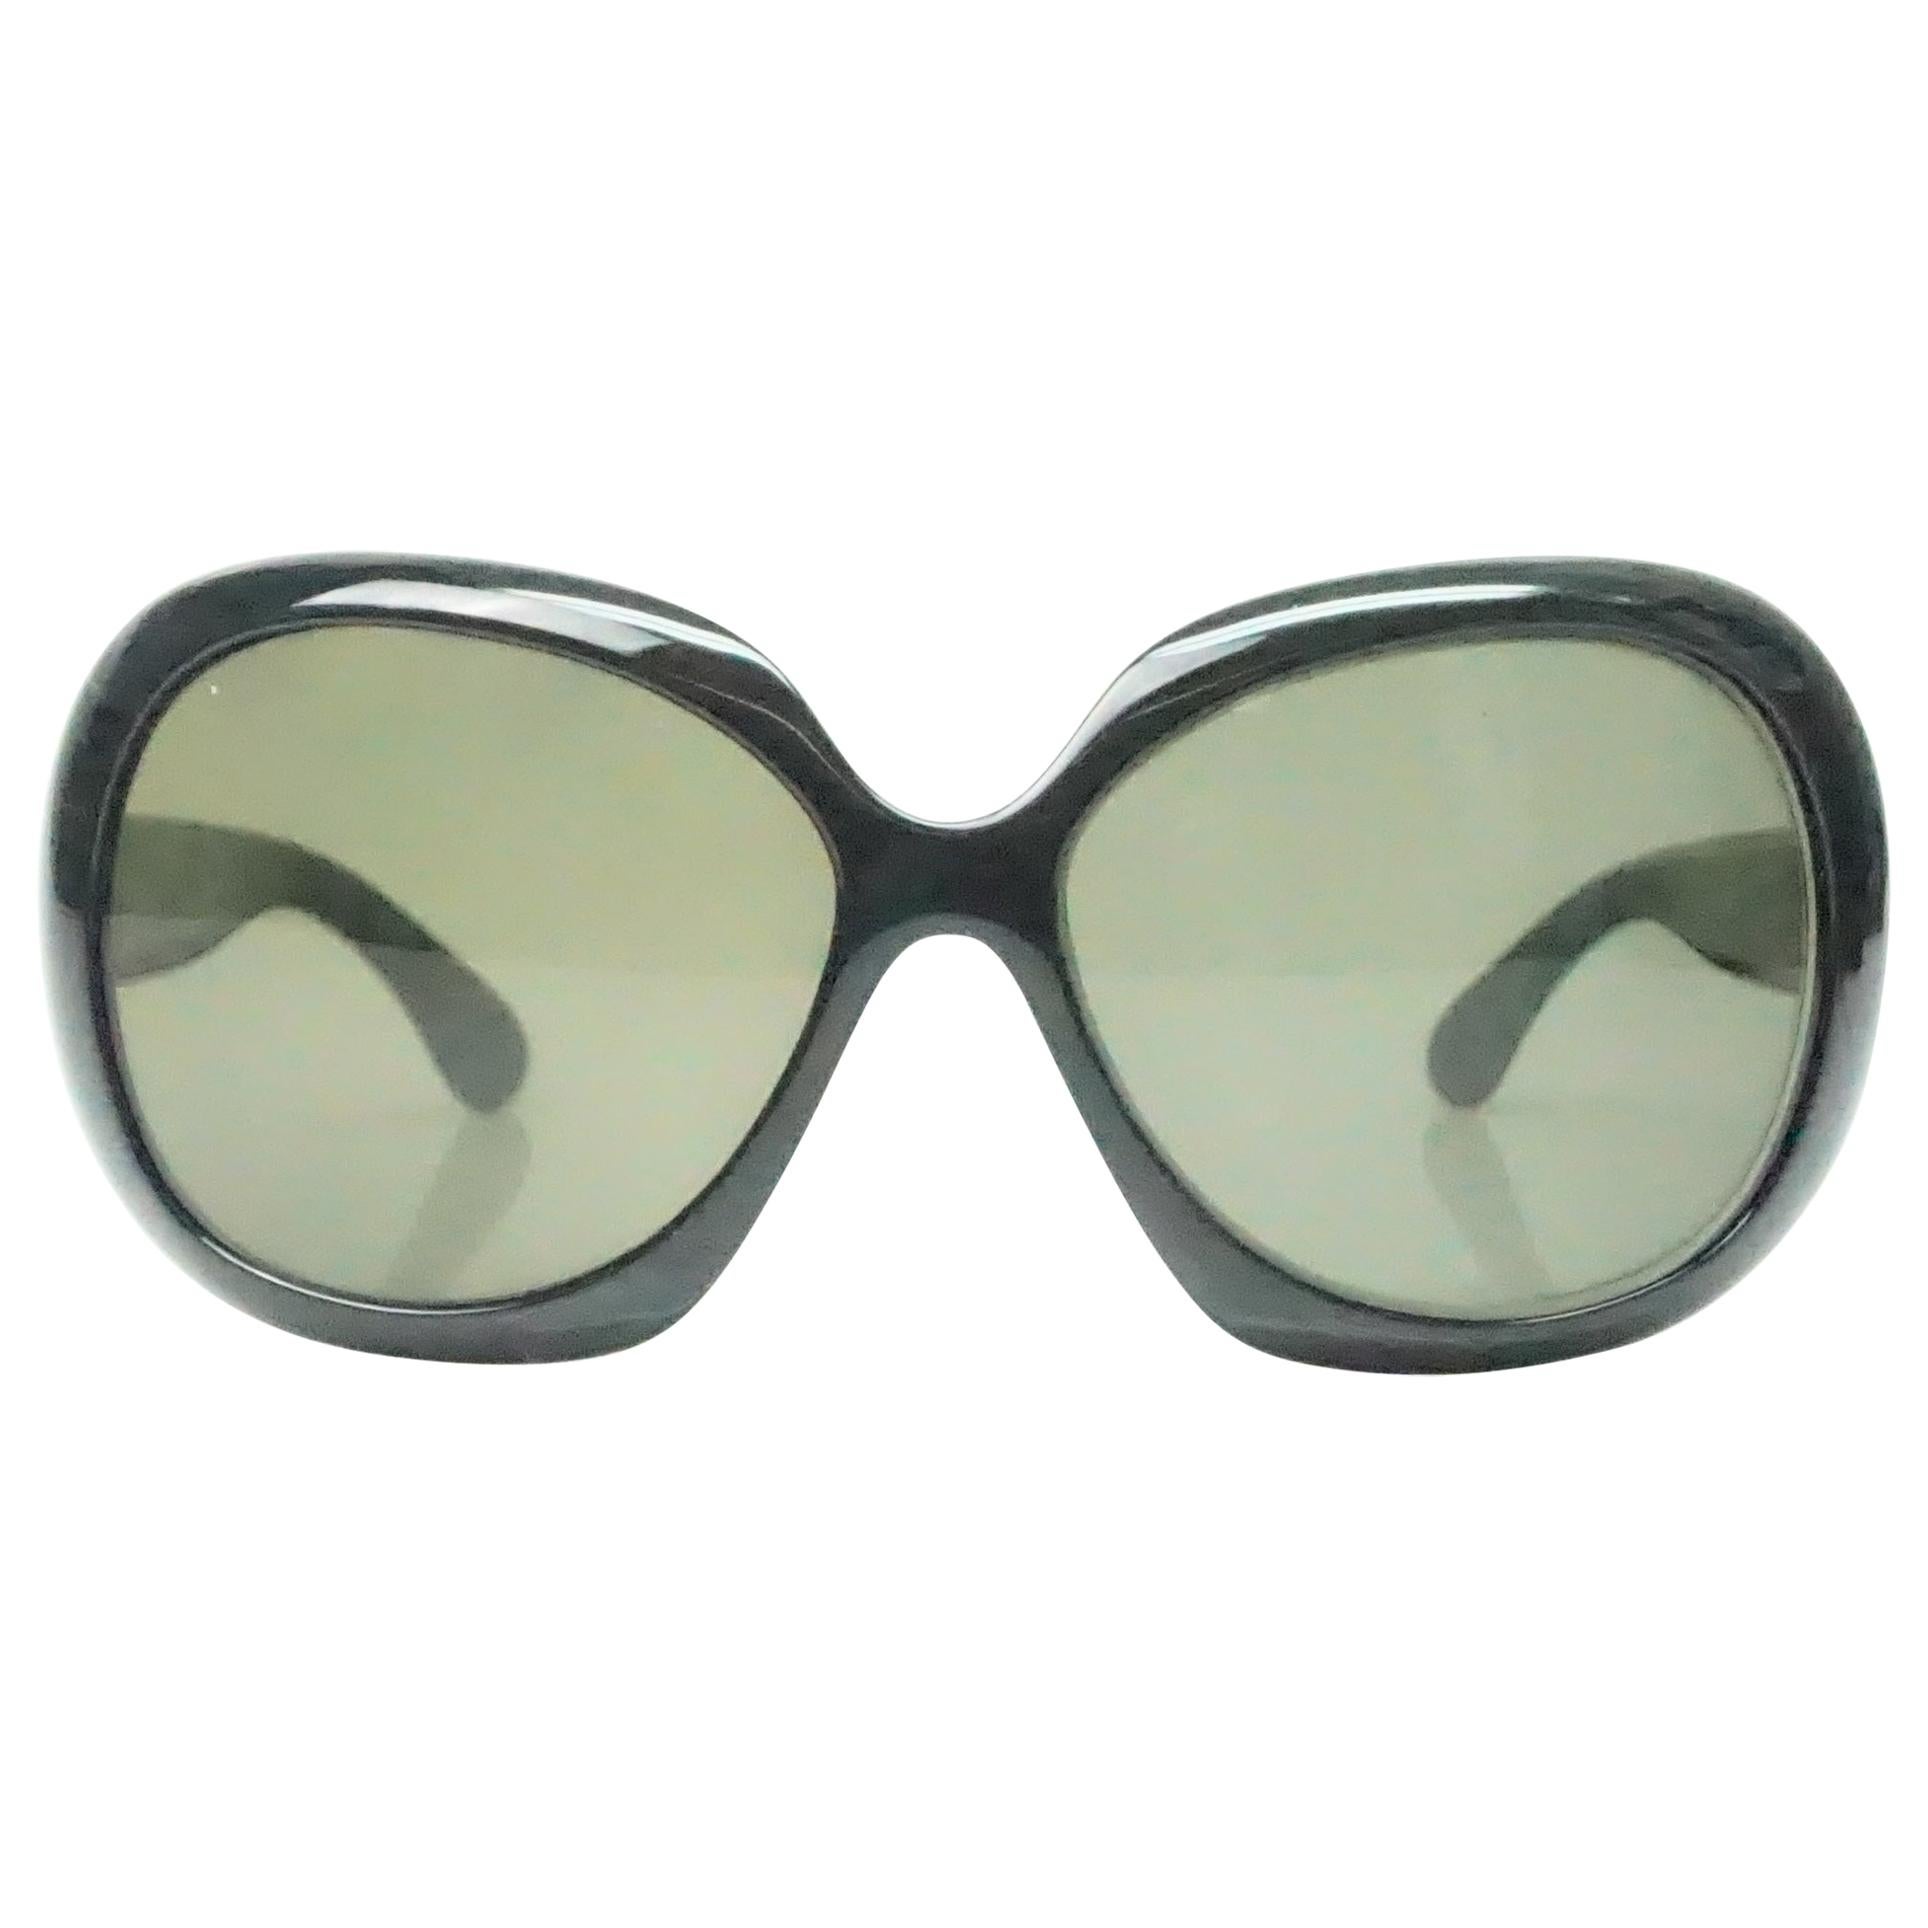 Ray-Ban Black Jackie Ohh II Sunglasses 